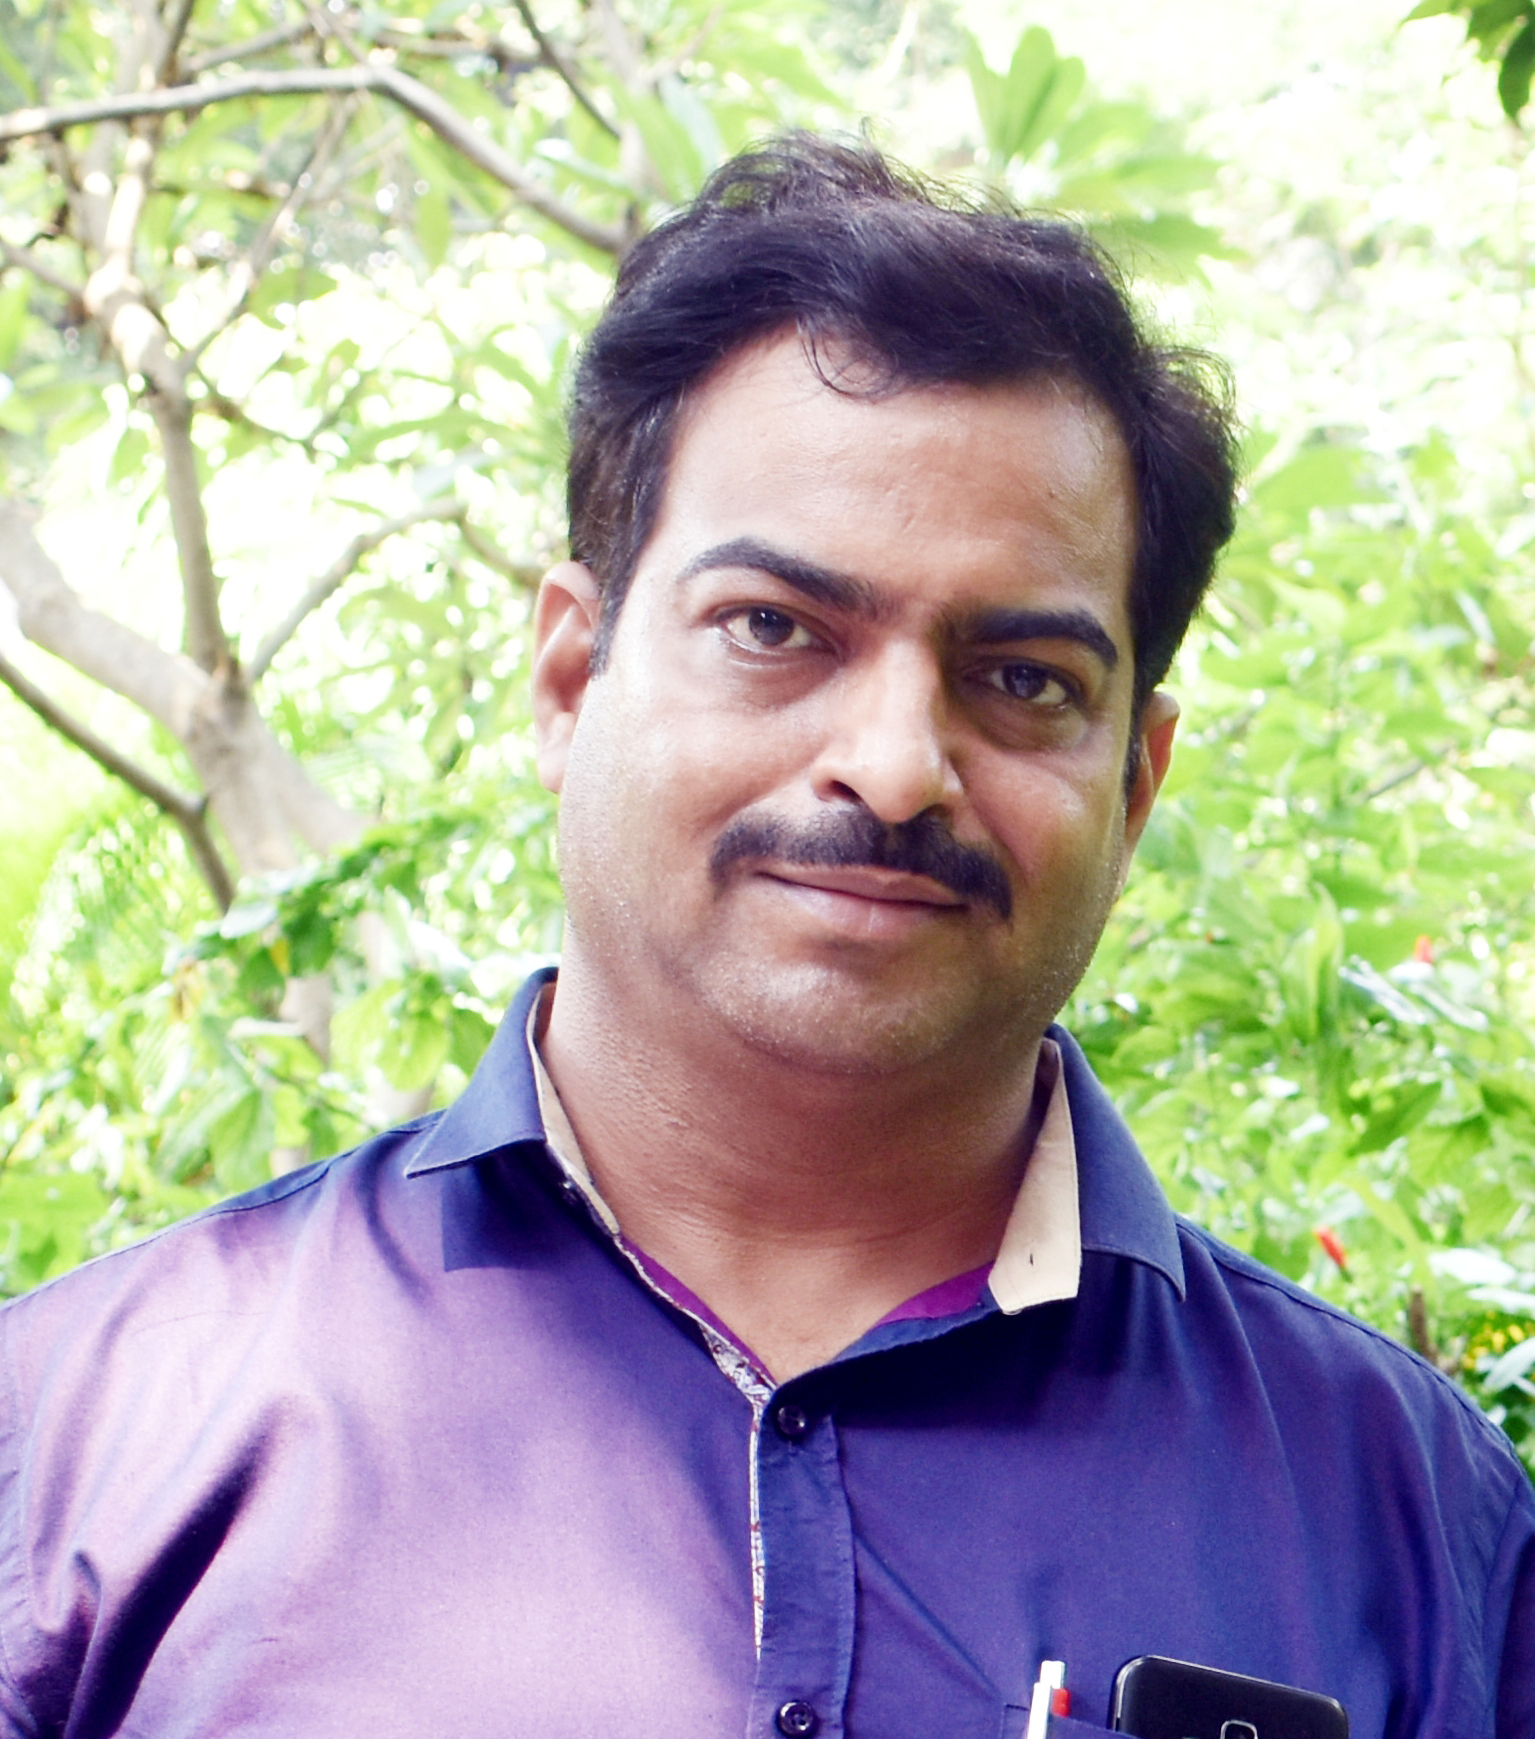 Sunil Tripathi